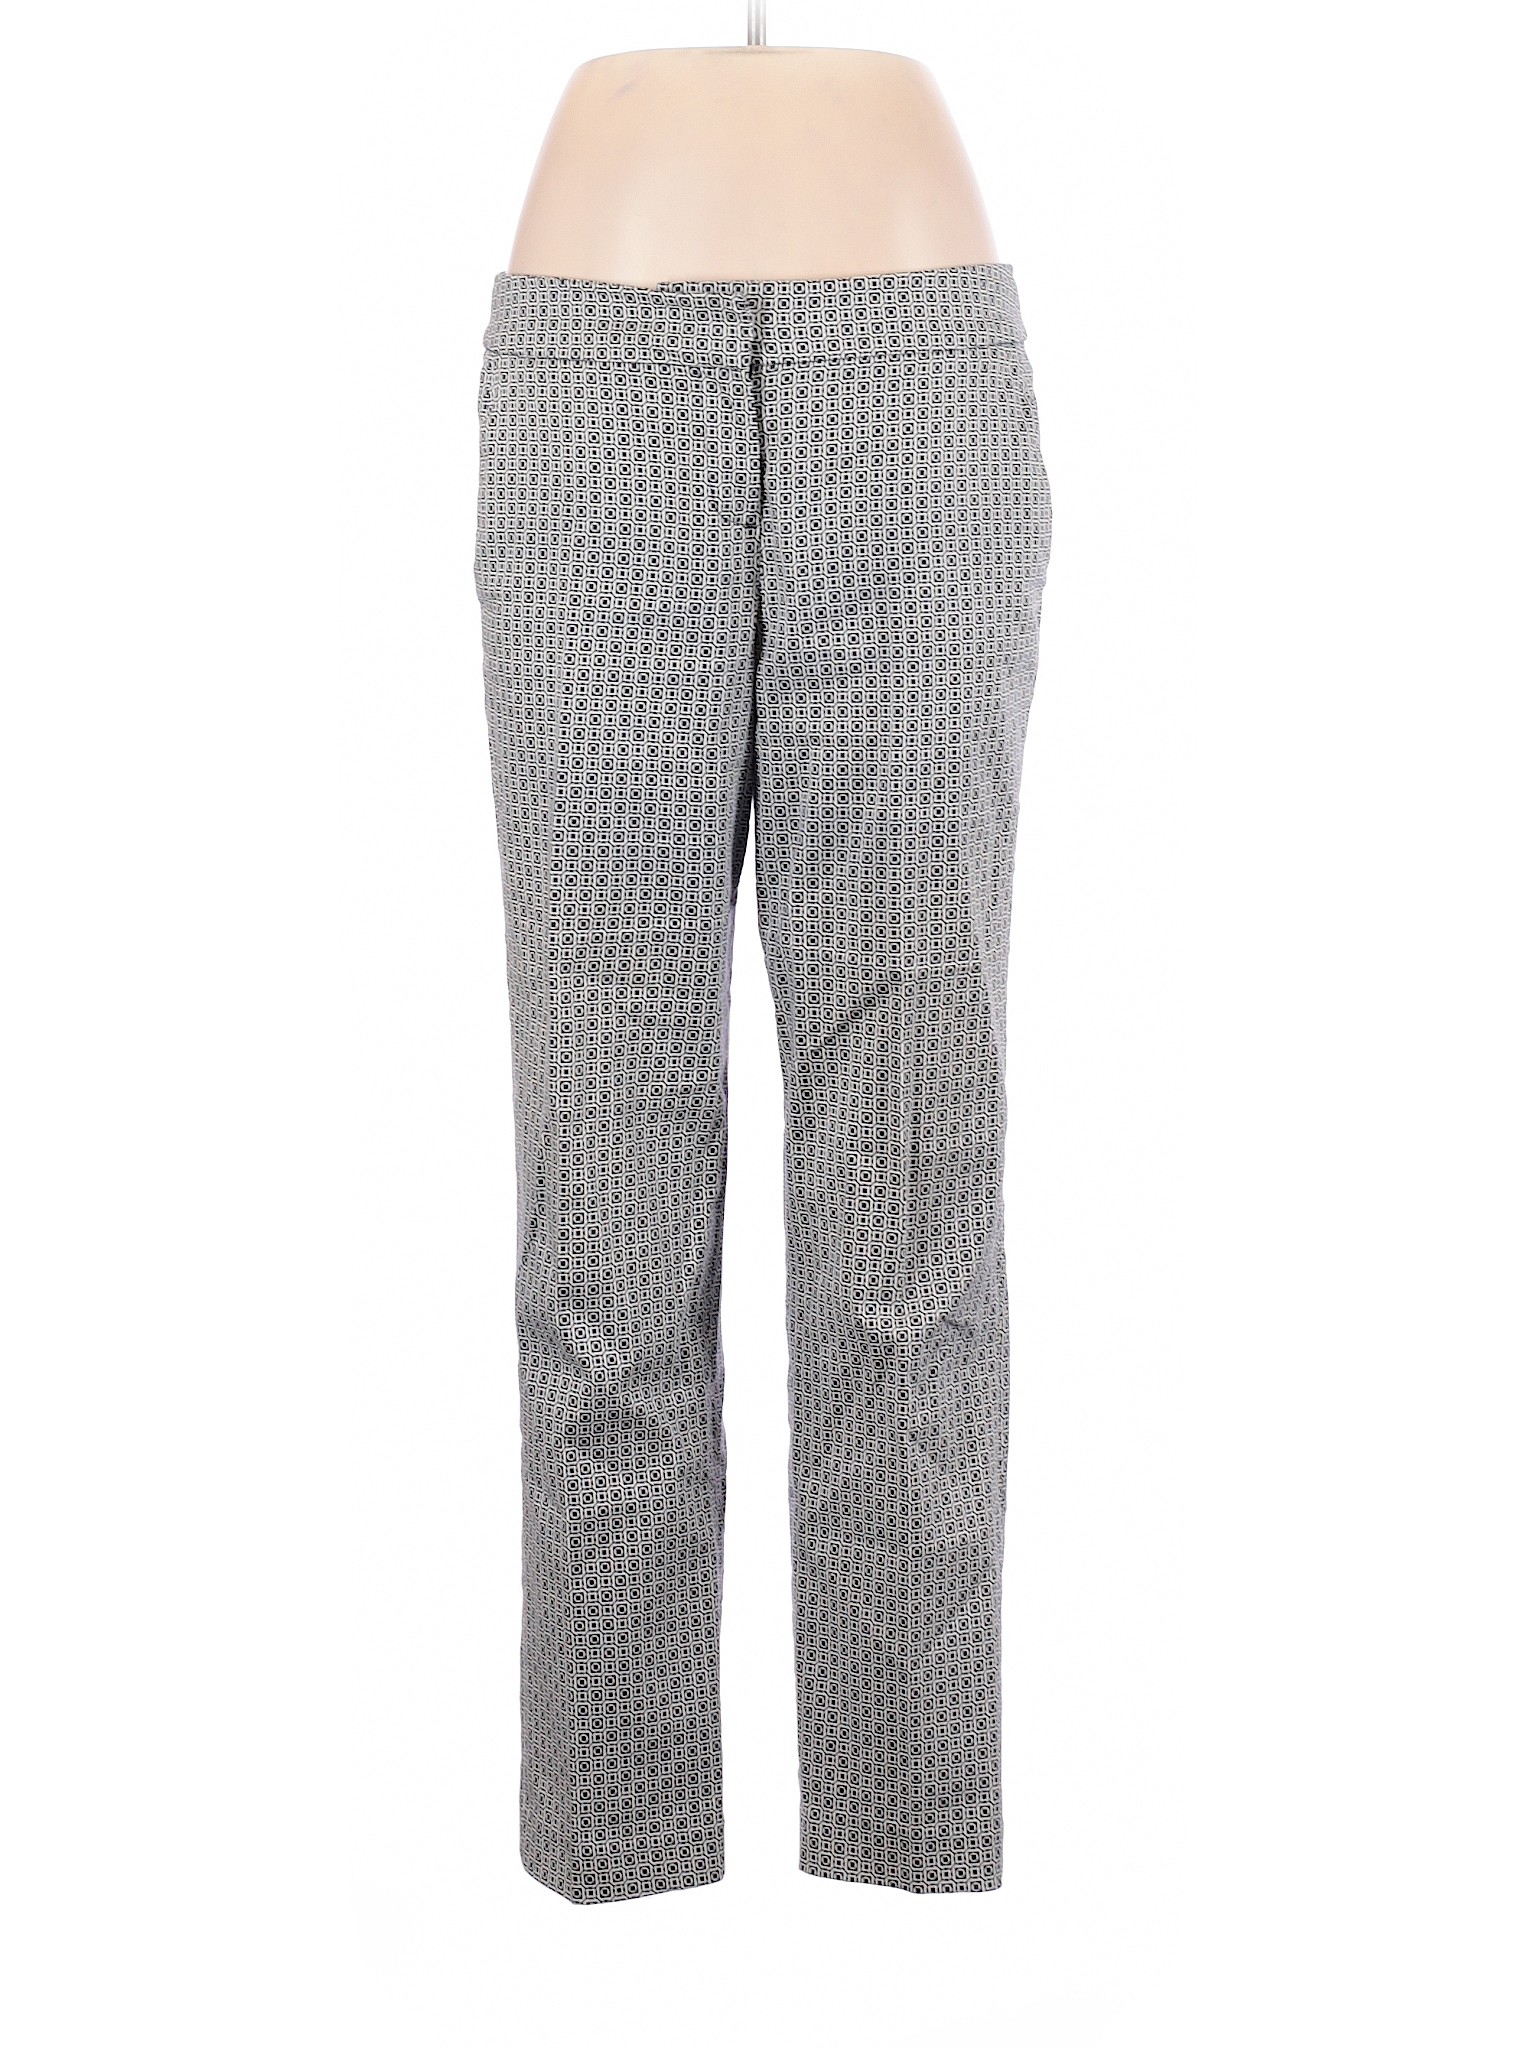 Adrienne Vittadini Women Gray Dress Pants 10 | eBay